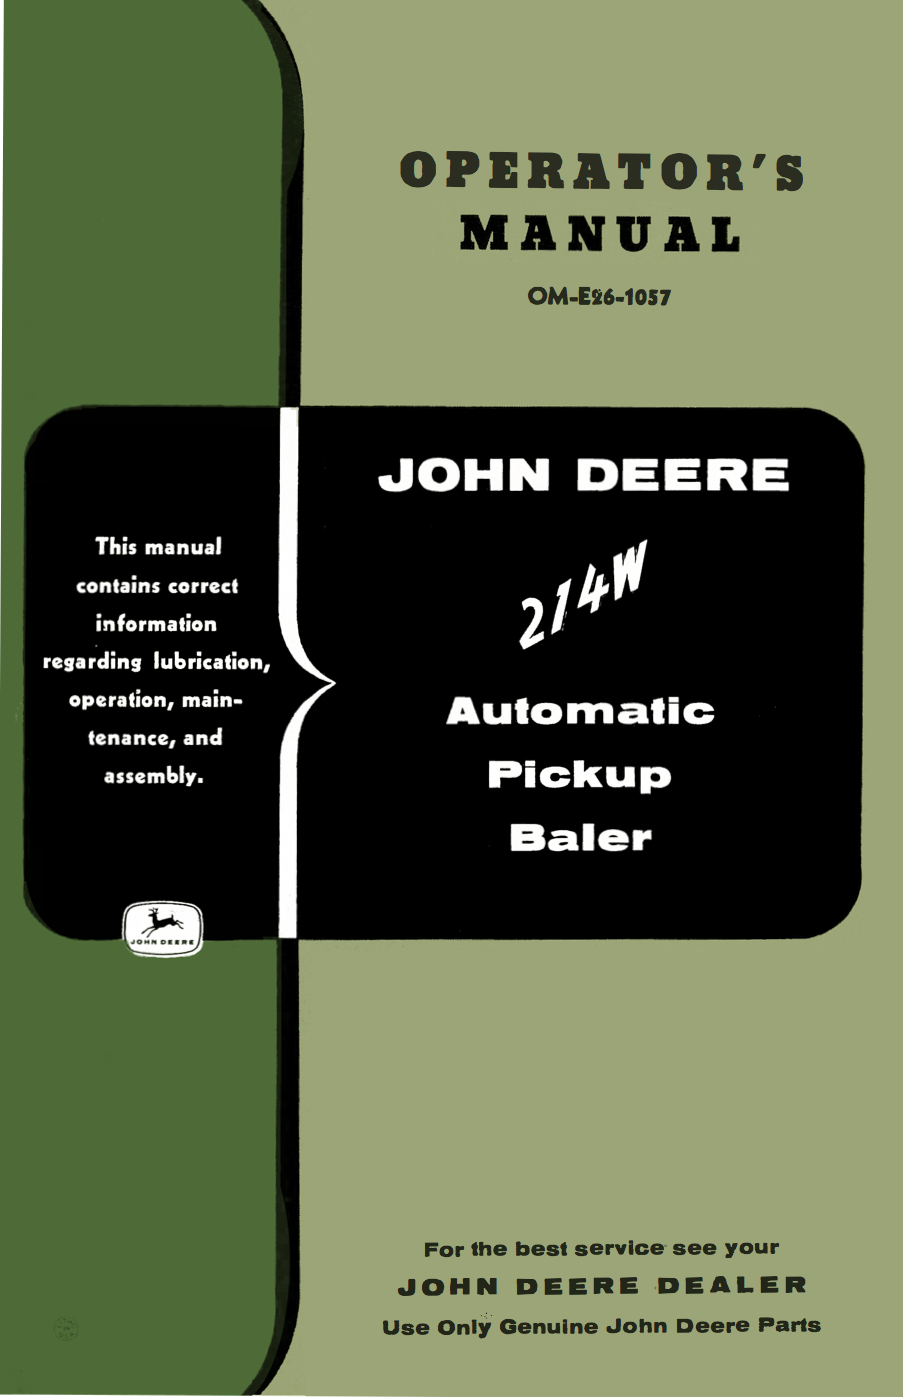 John Deere 214W Automatic Pickup Baler - Operator's Manual - Ag Manuals - A Provider of Digital Farm Manuals - 1